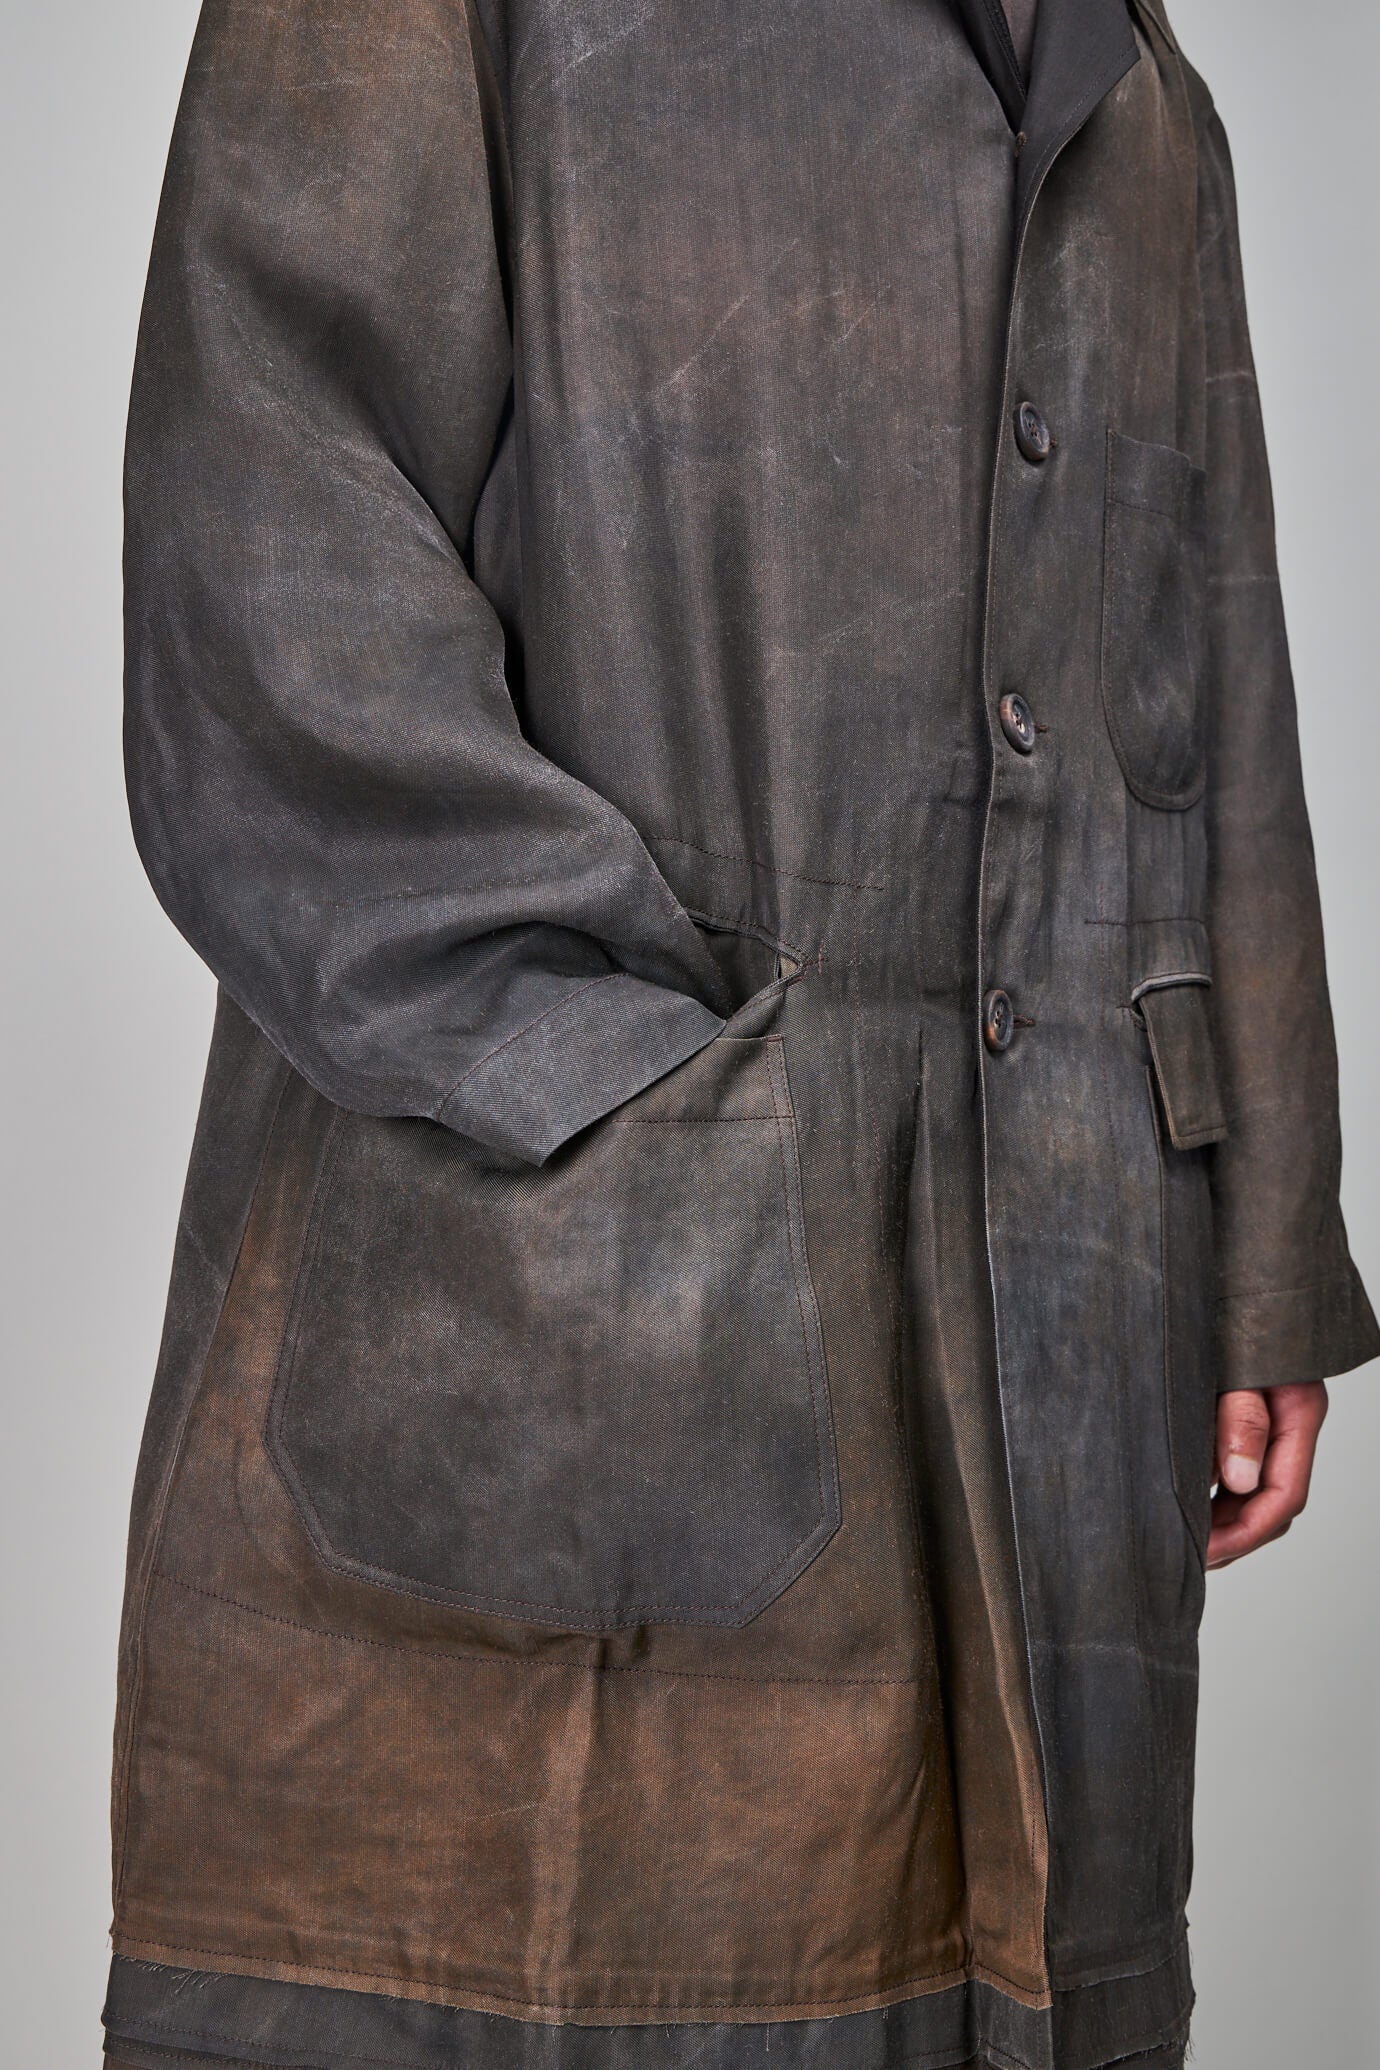 Classic Workers Coat, brown